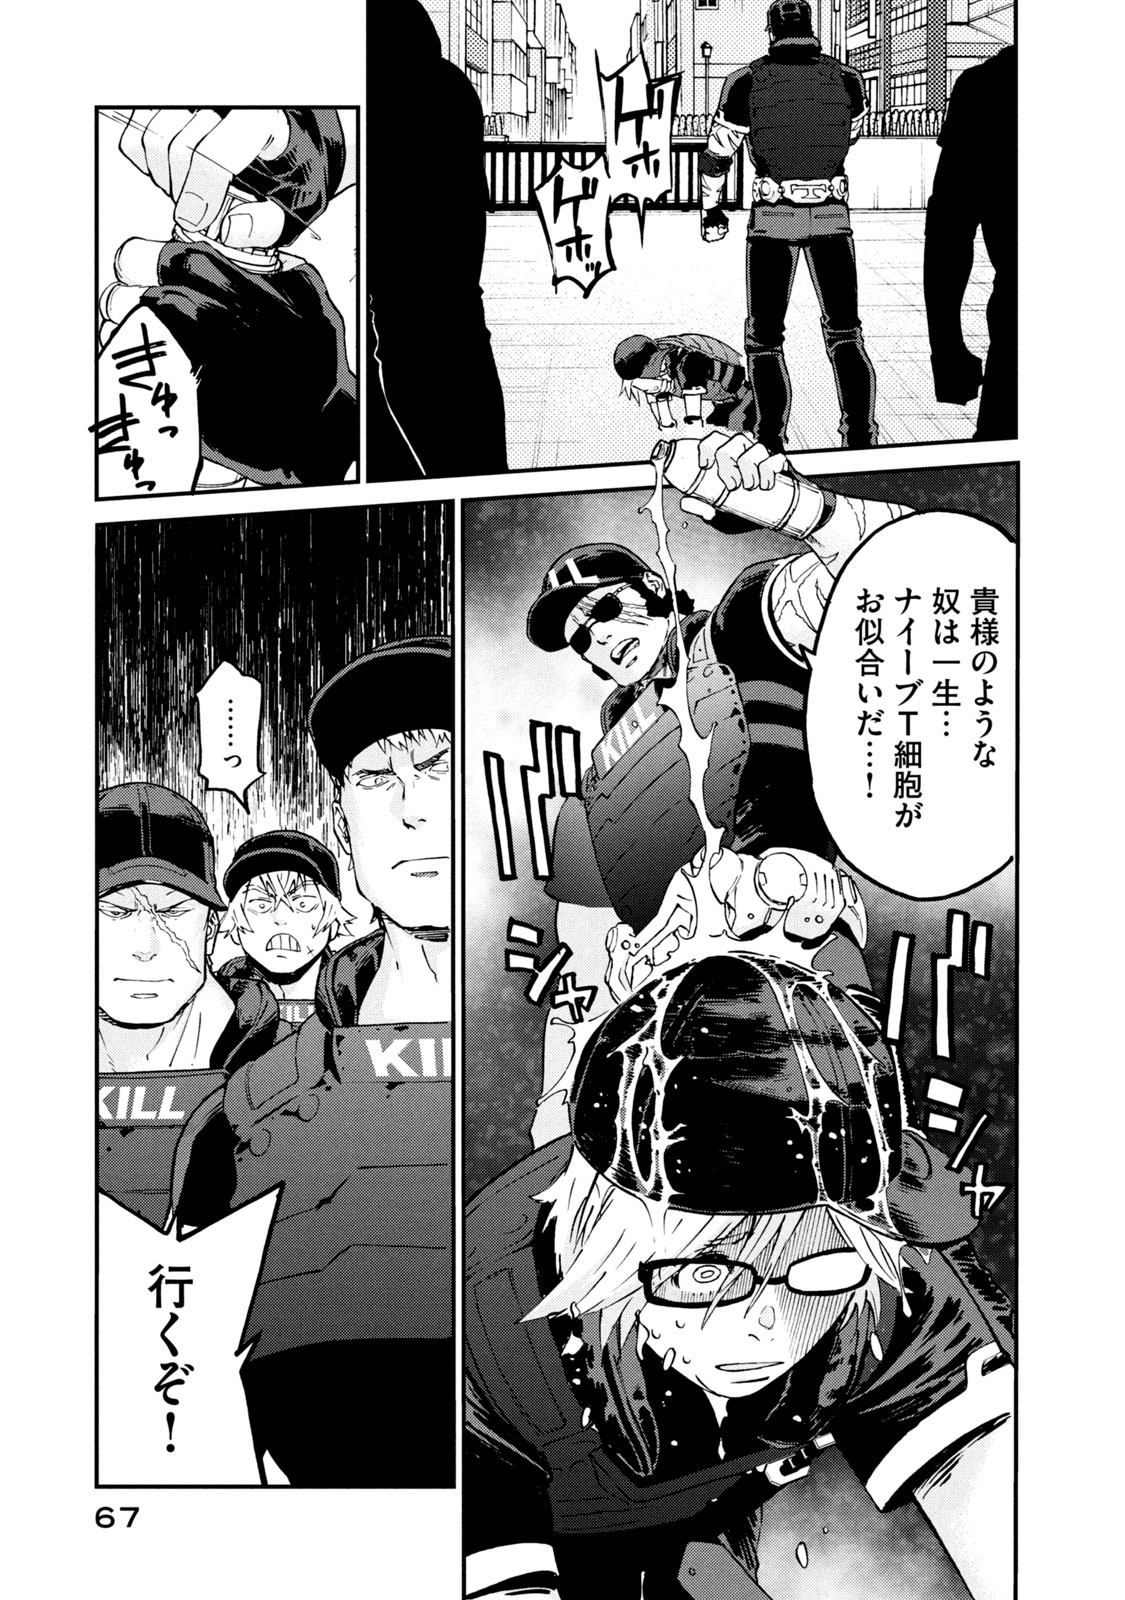 Hataraku Saibou BLACK - Chapter 45 - Page 3